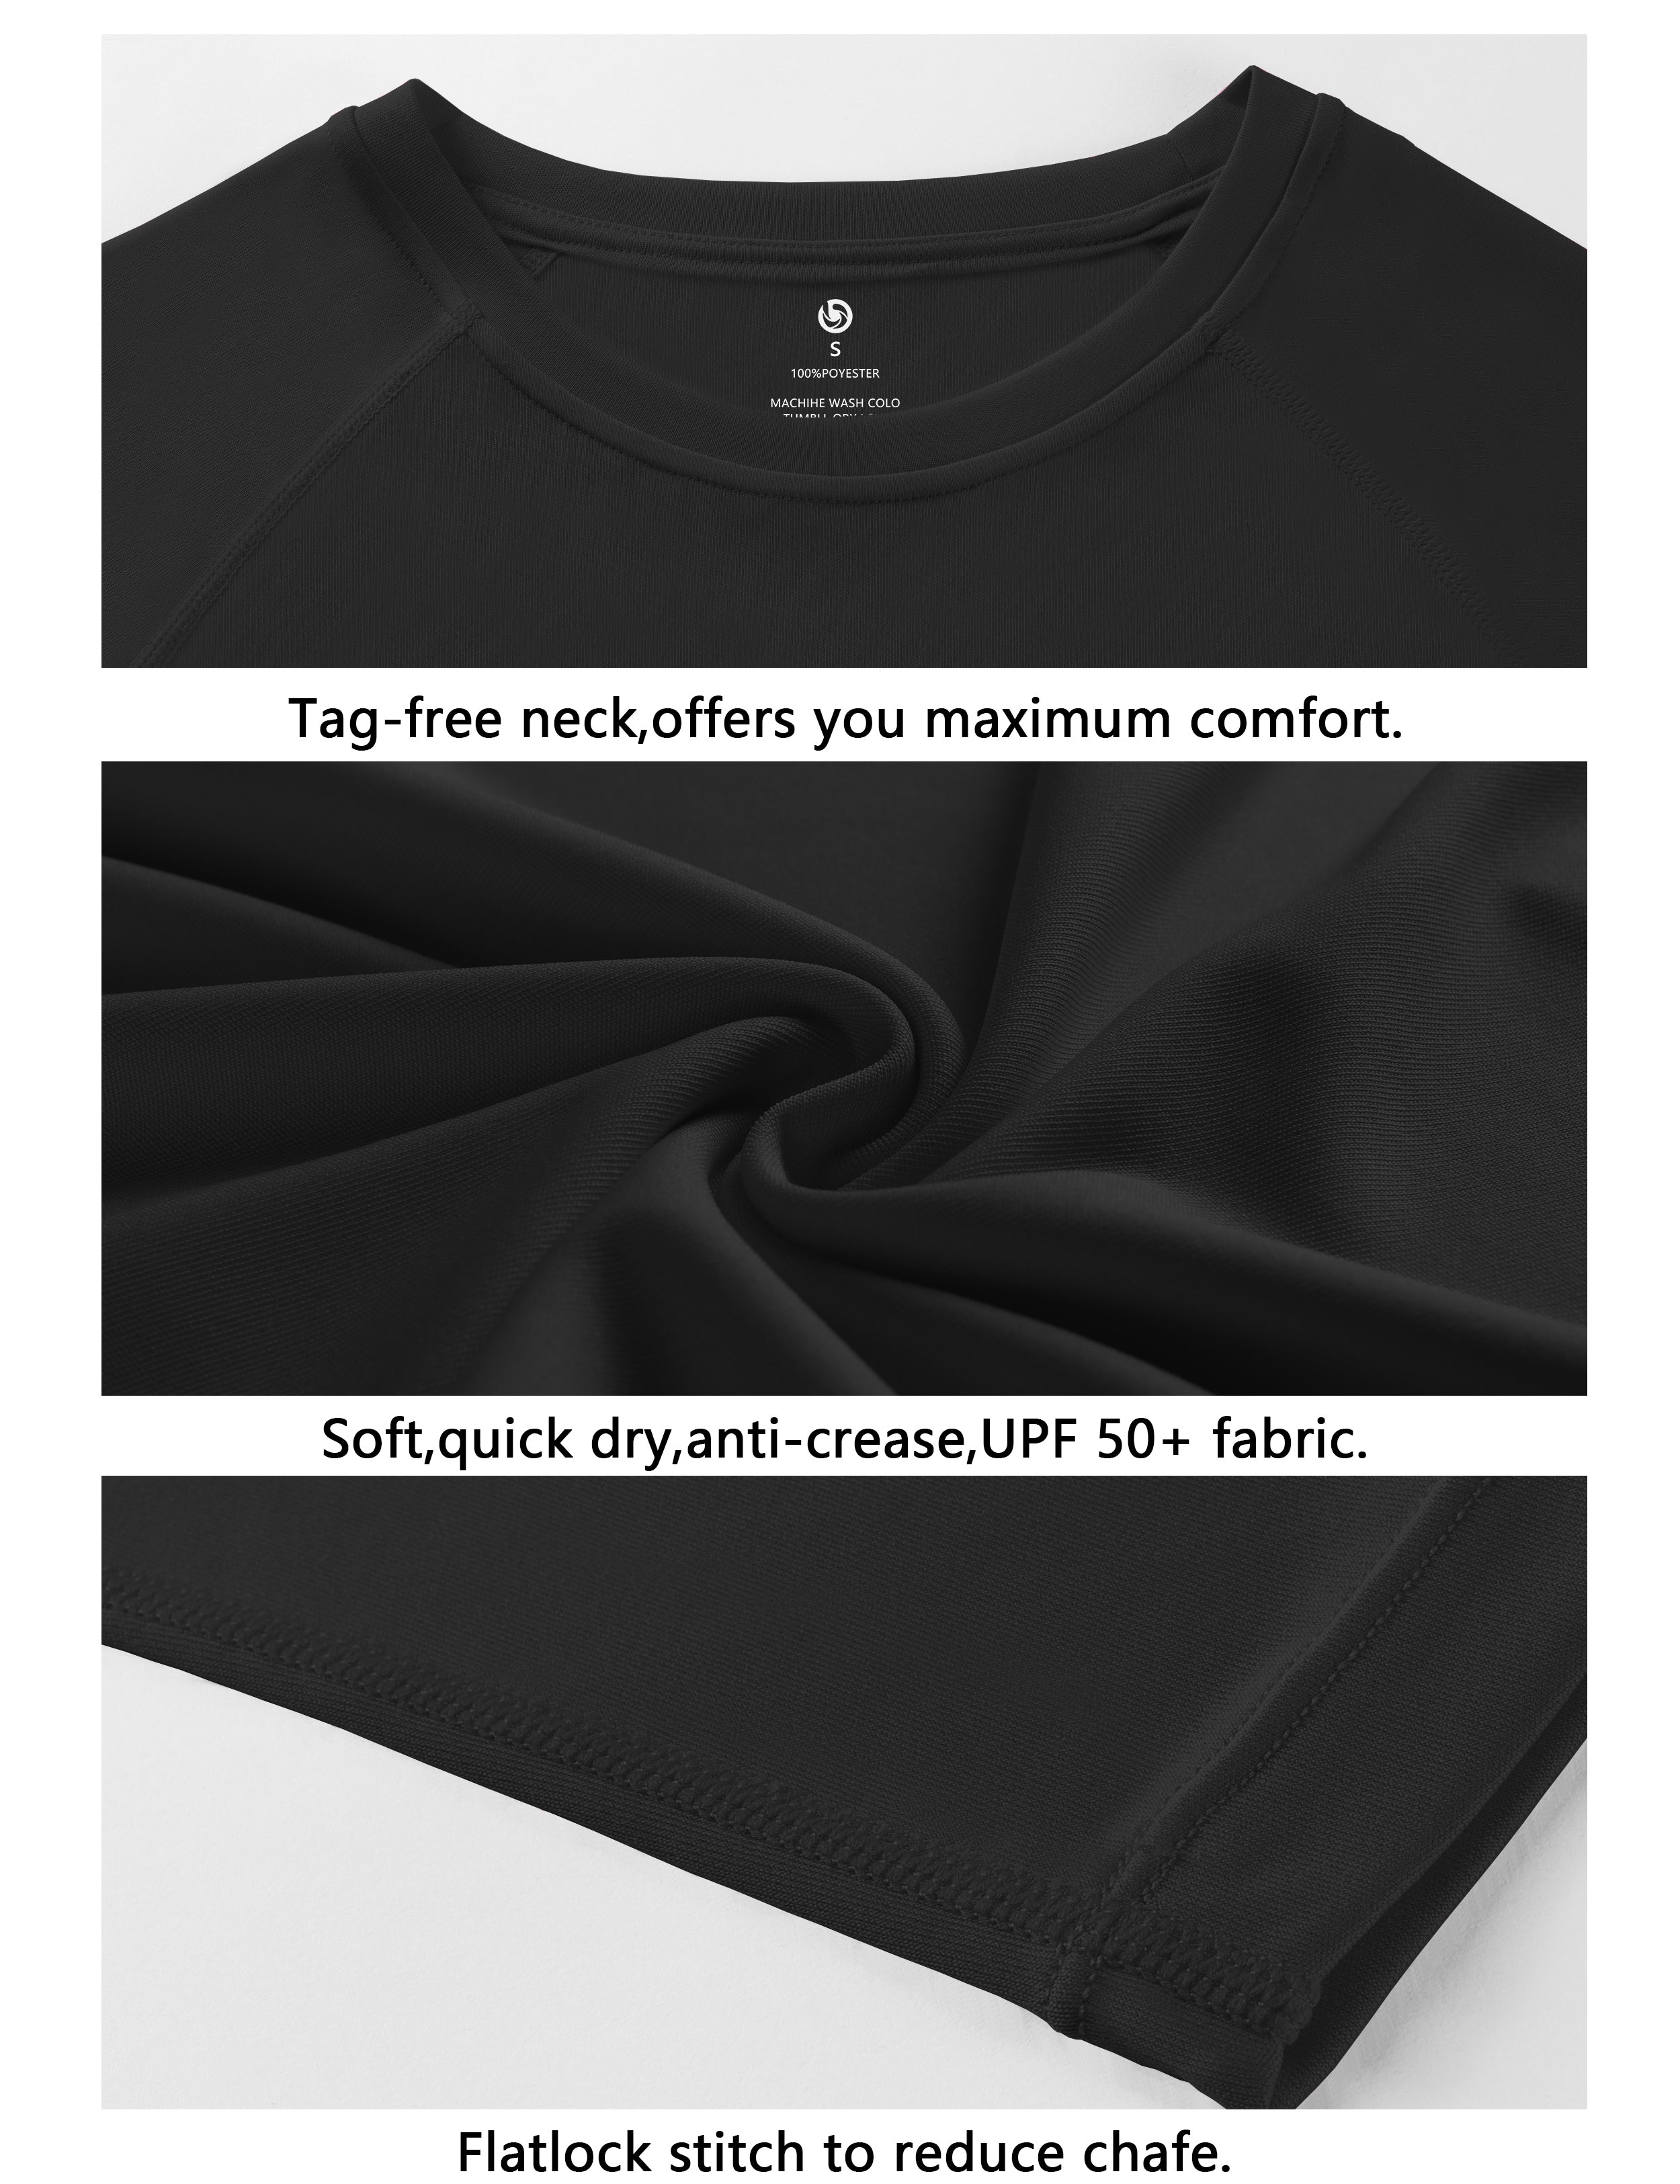 Long Sleeve Athletic Shirts black 100% polyester Lightweight Slim Fit UPF 50+ blocks sun's harmful rays Treated to wick moisture, dries ultra-fast